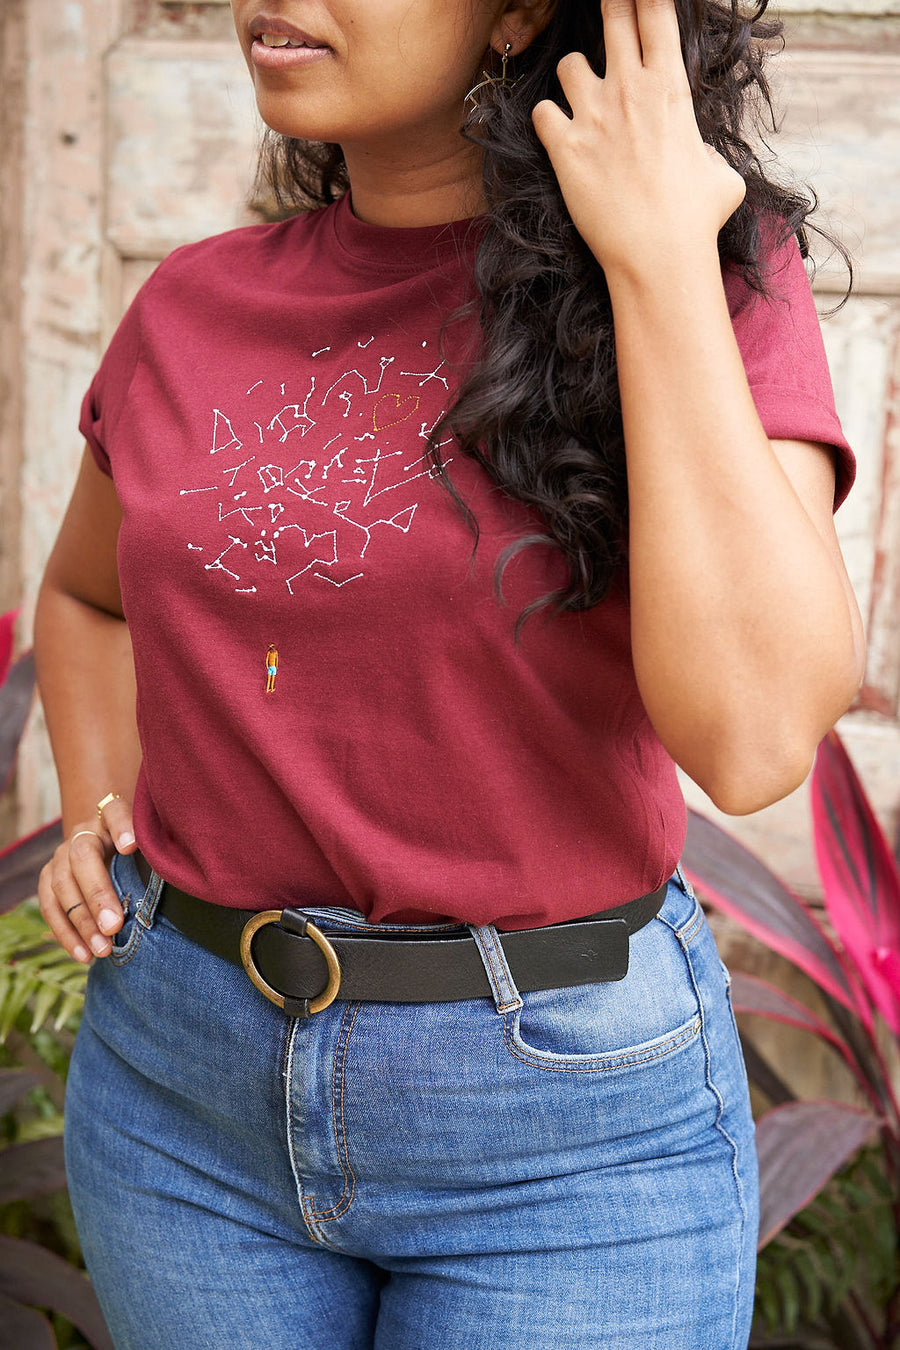 Lundi au Soleil-Tee-shirt coton unisexe-Constellation